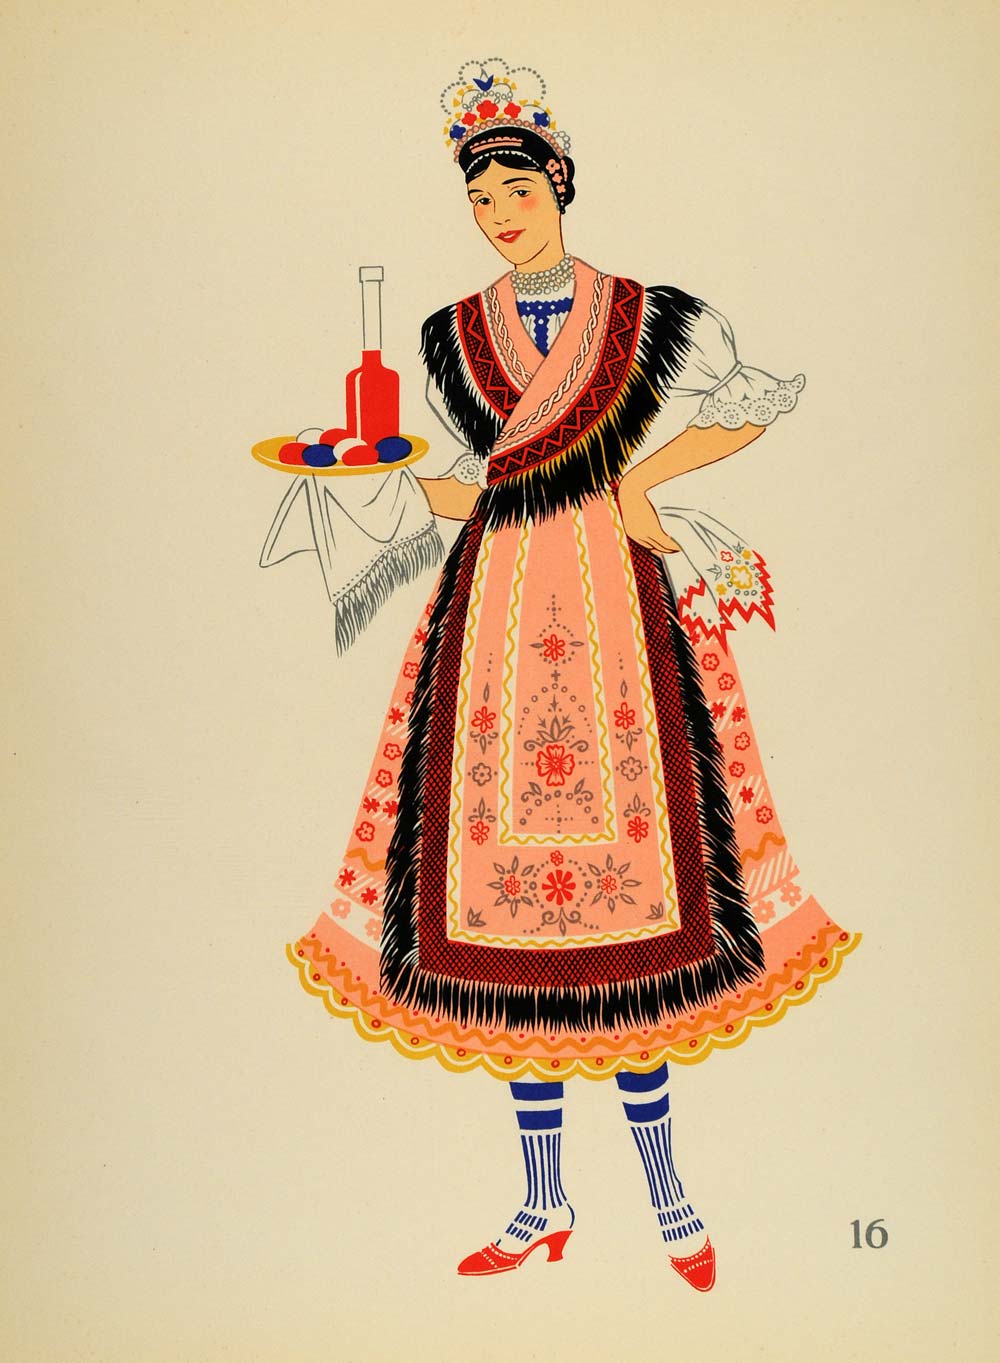 1939 Costume Woman Apron Sarkoz Hungary Lithograph NICE - ORIGINAL COS4